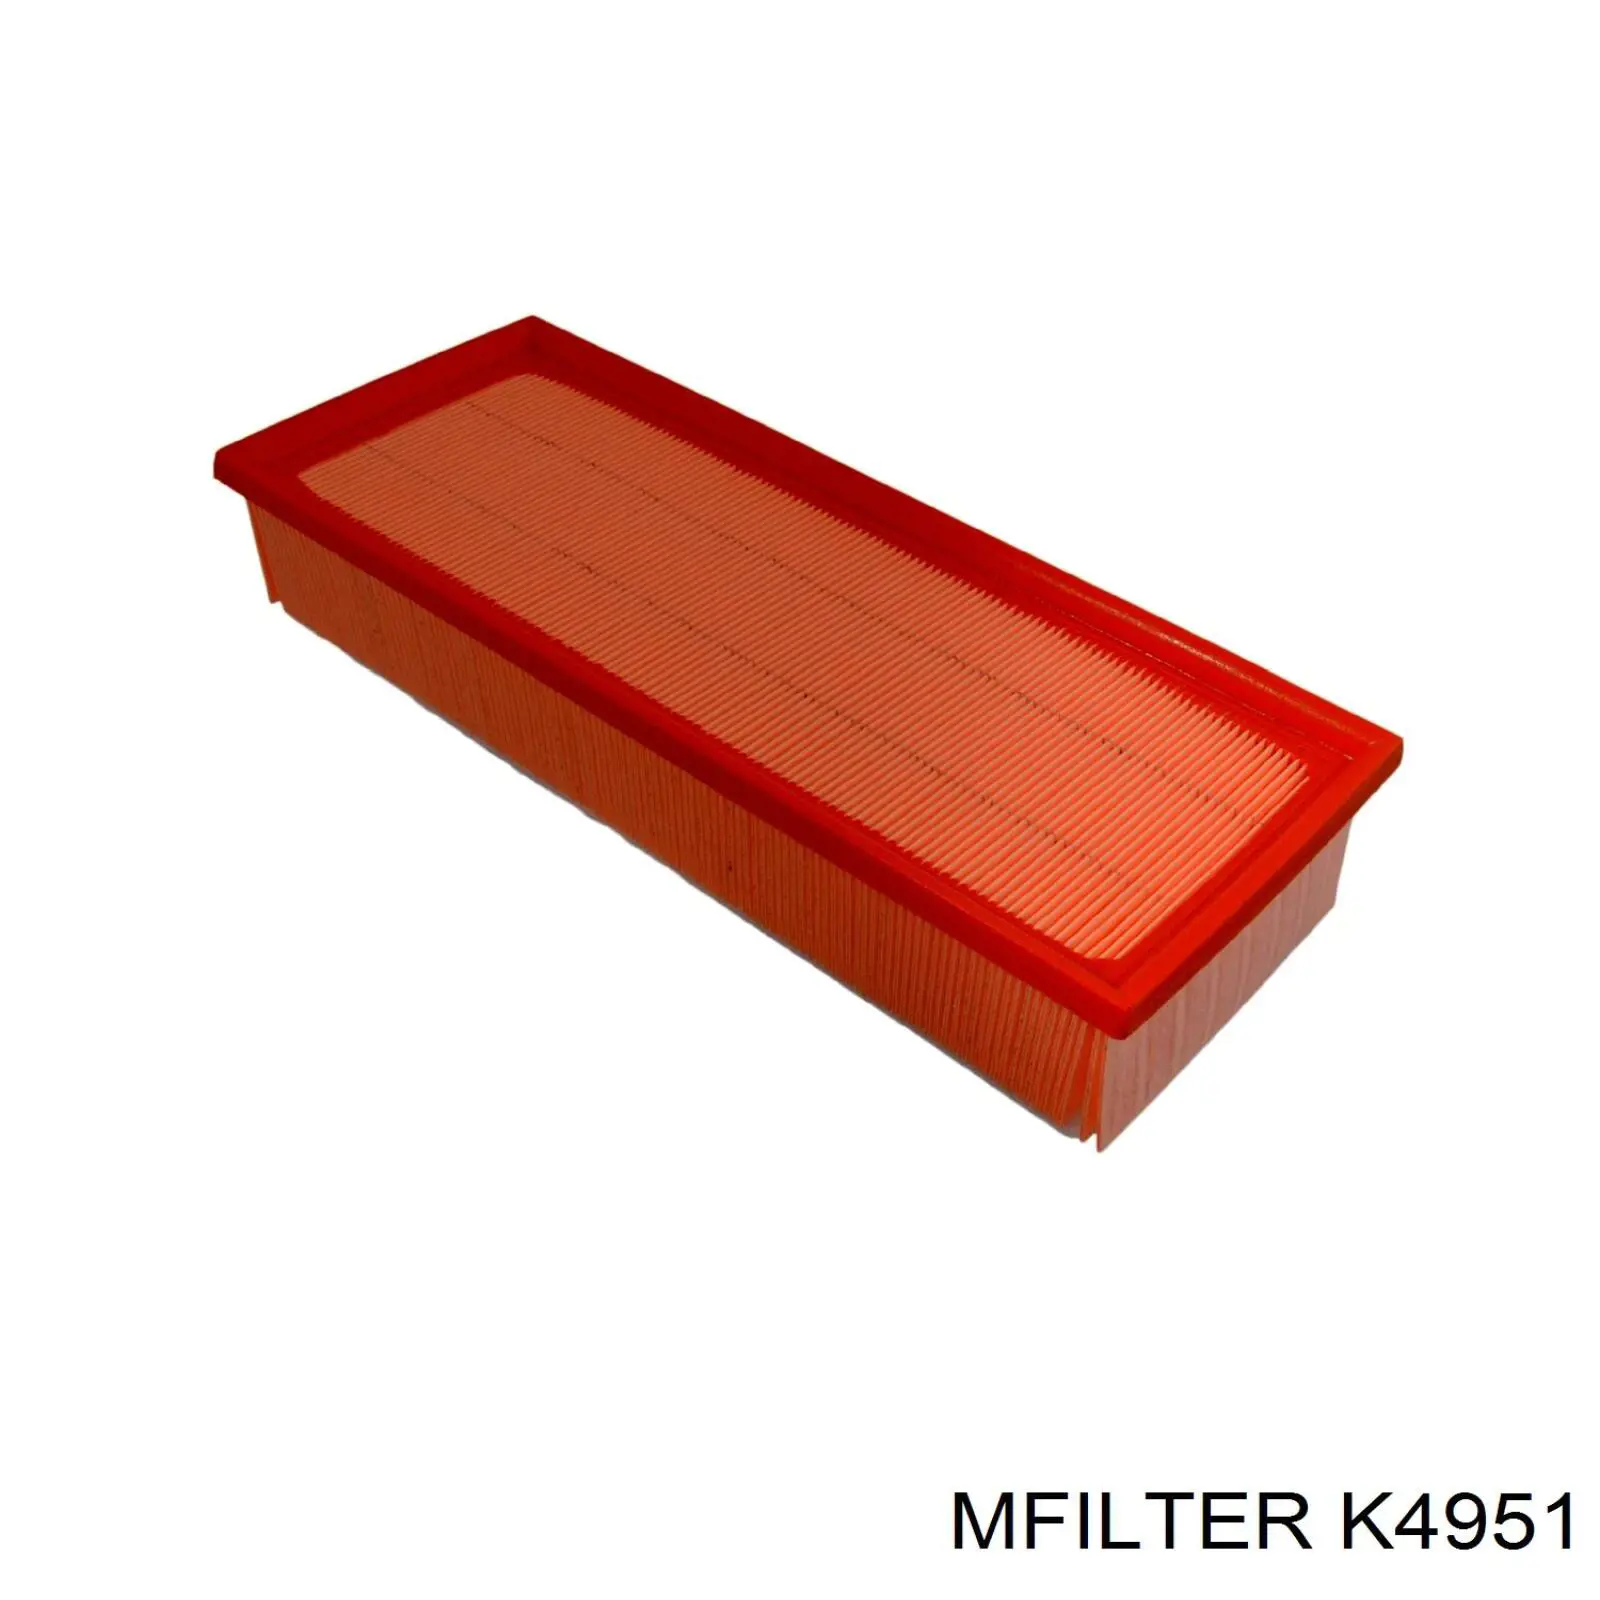 K4951 Mfilter filtro de aire